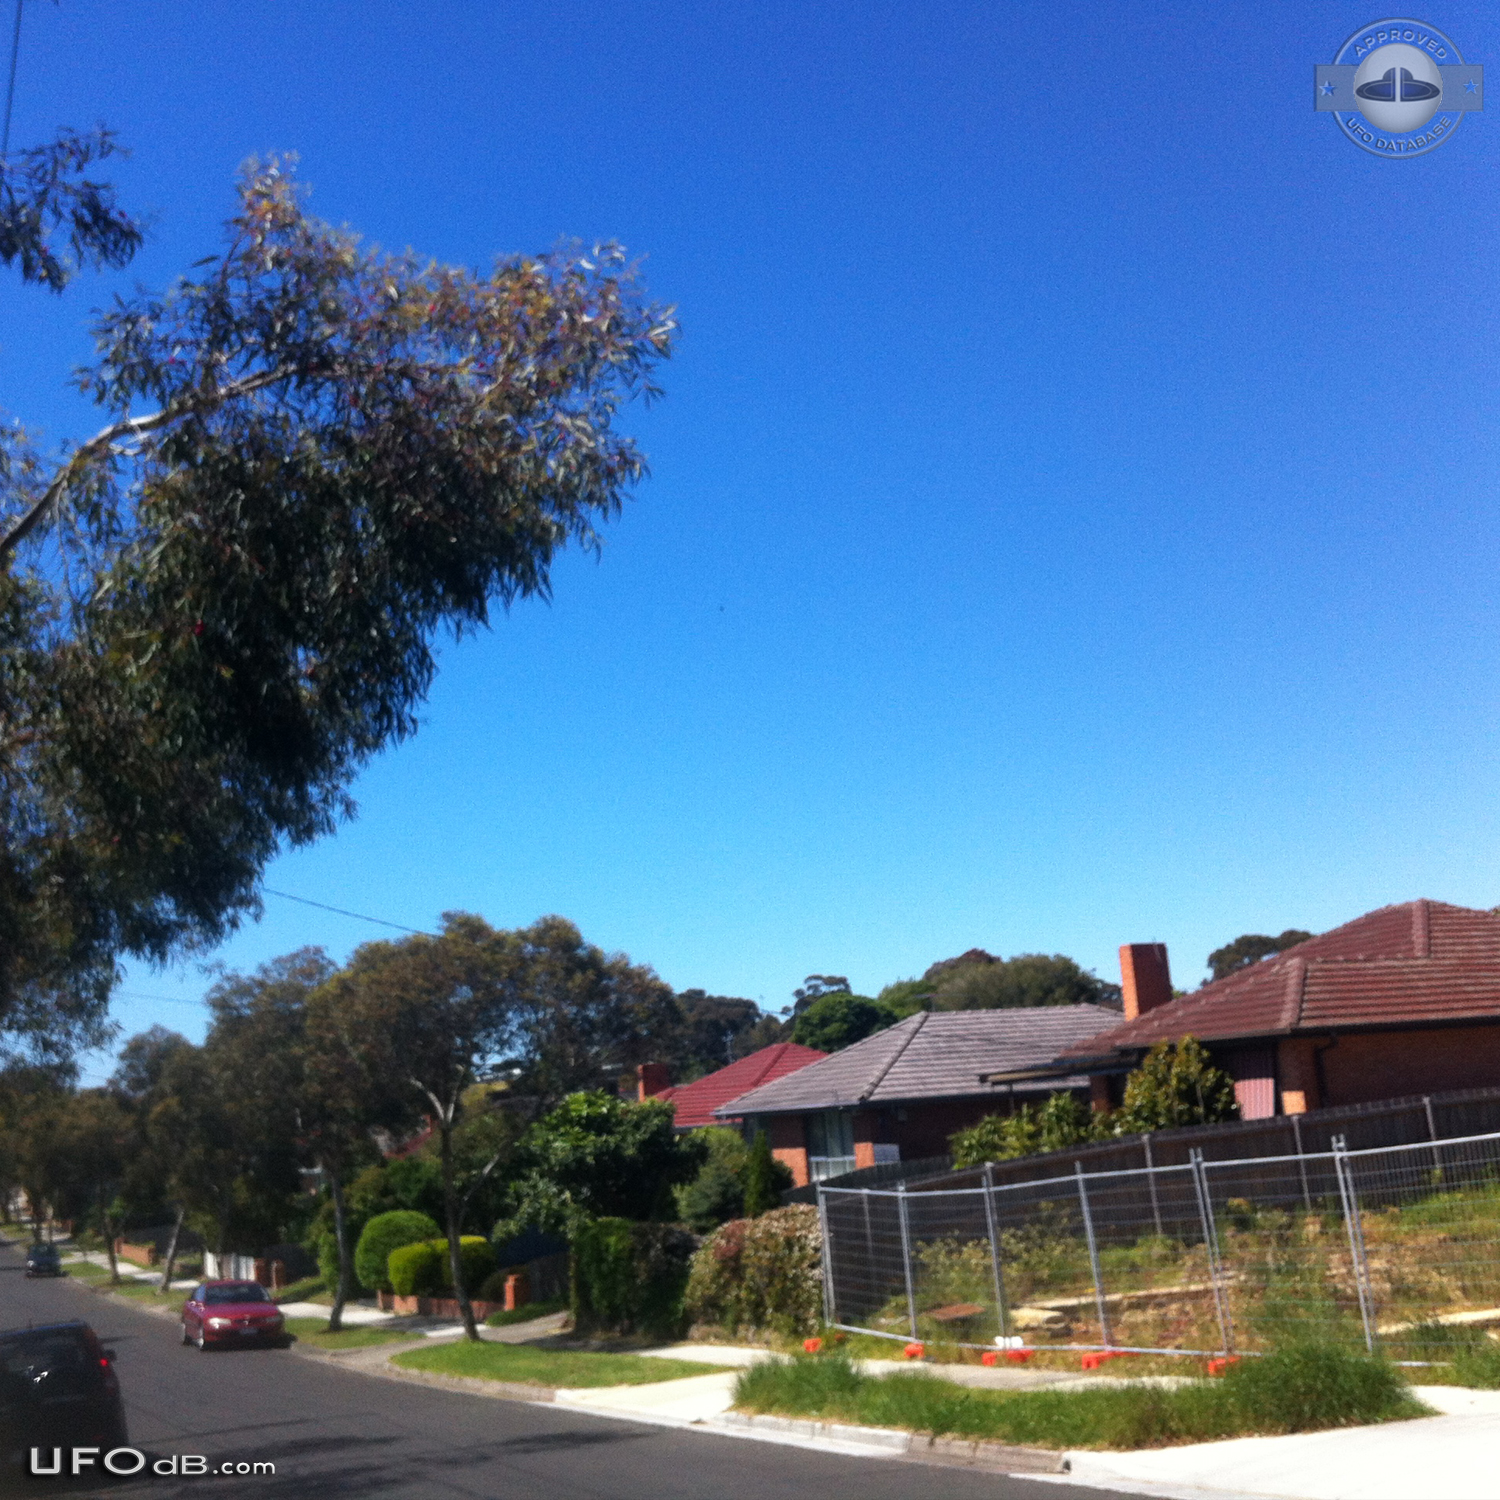 Donut Shaped UFO in blue sky over Blackburn North, Australia in 2012 UFO Picture #575-1